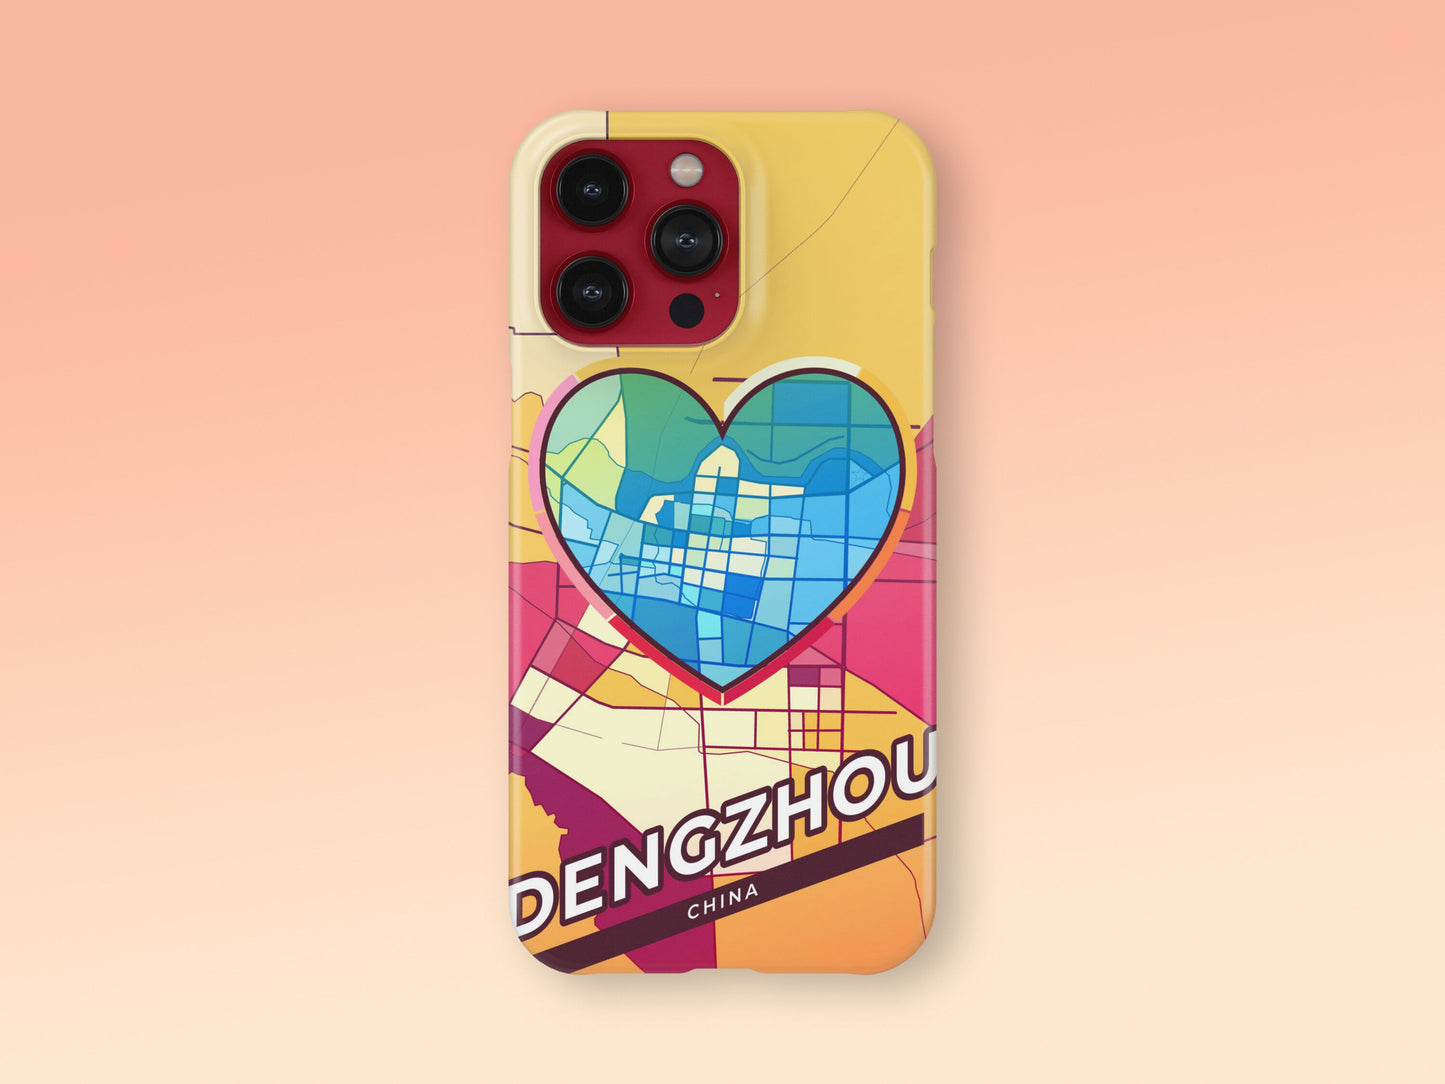 Dengzhou China slim phone case with colorful icon. Birthday, wedding or housewarming gift. Couple match cases. 2